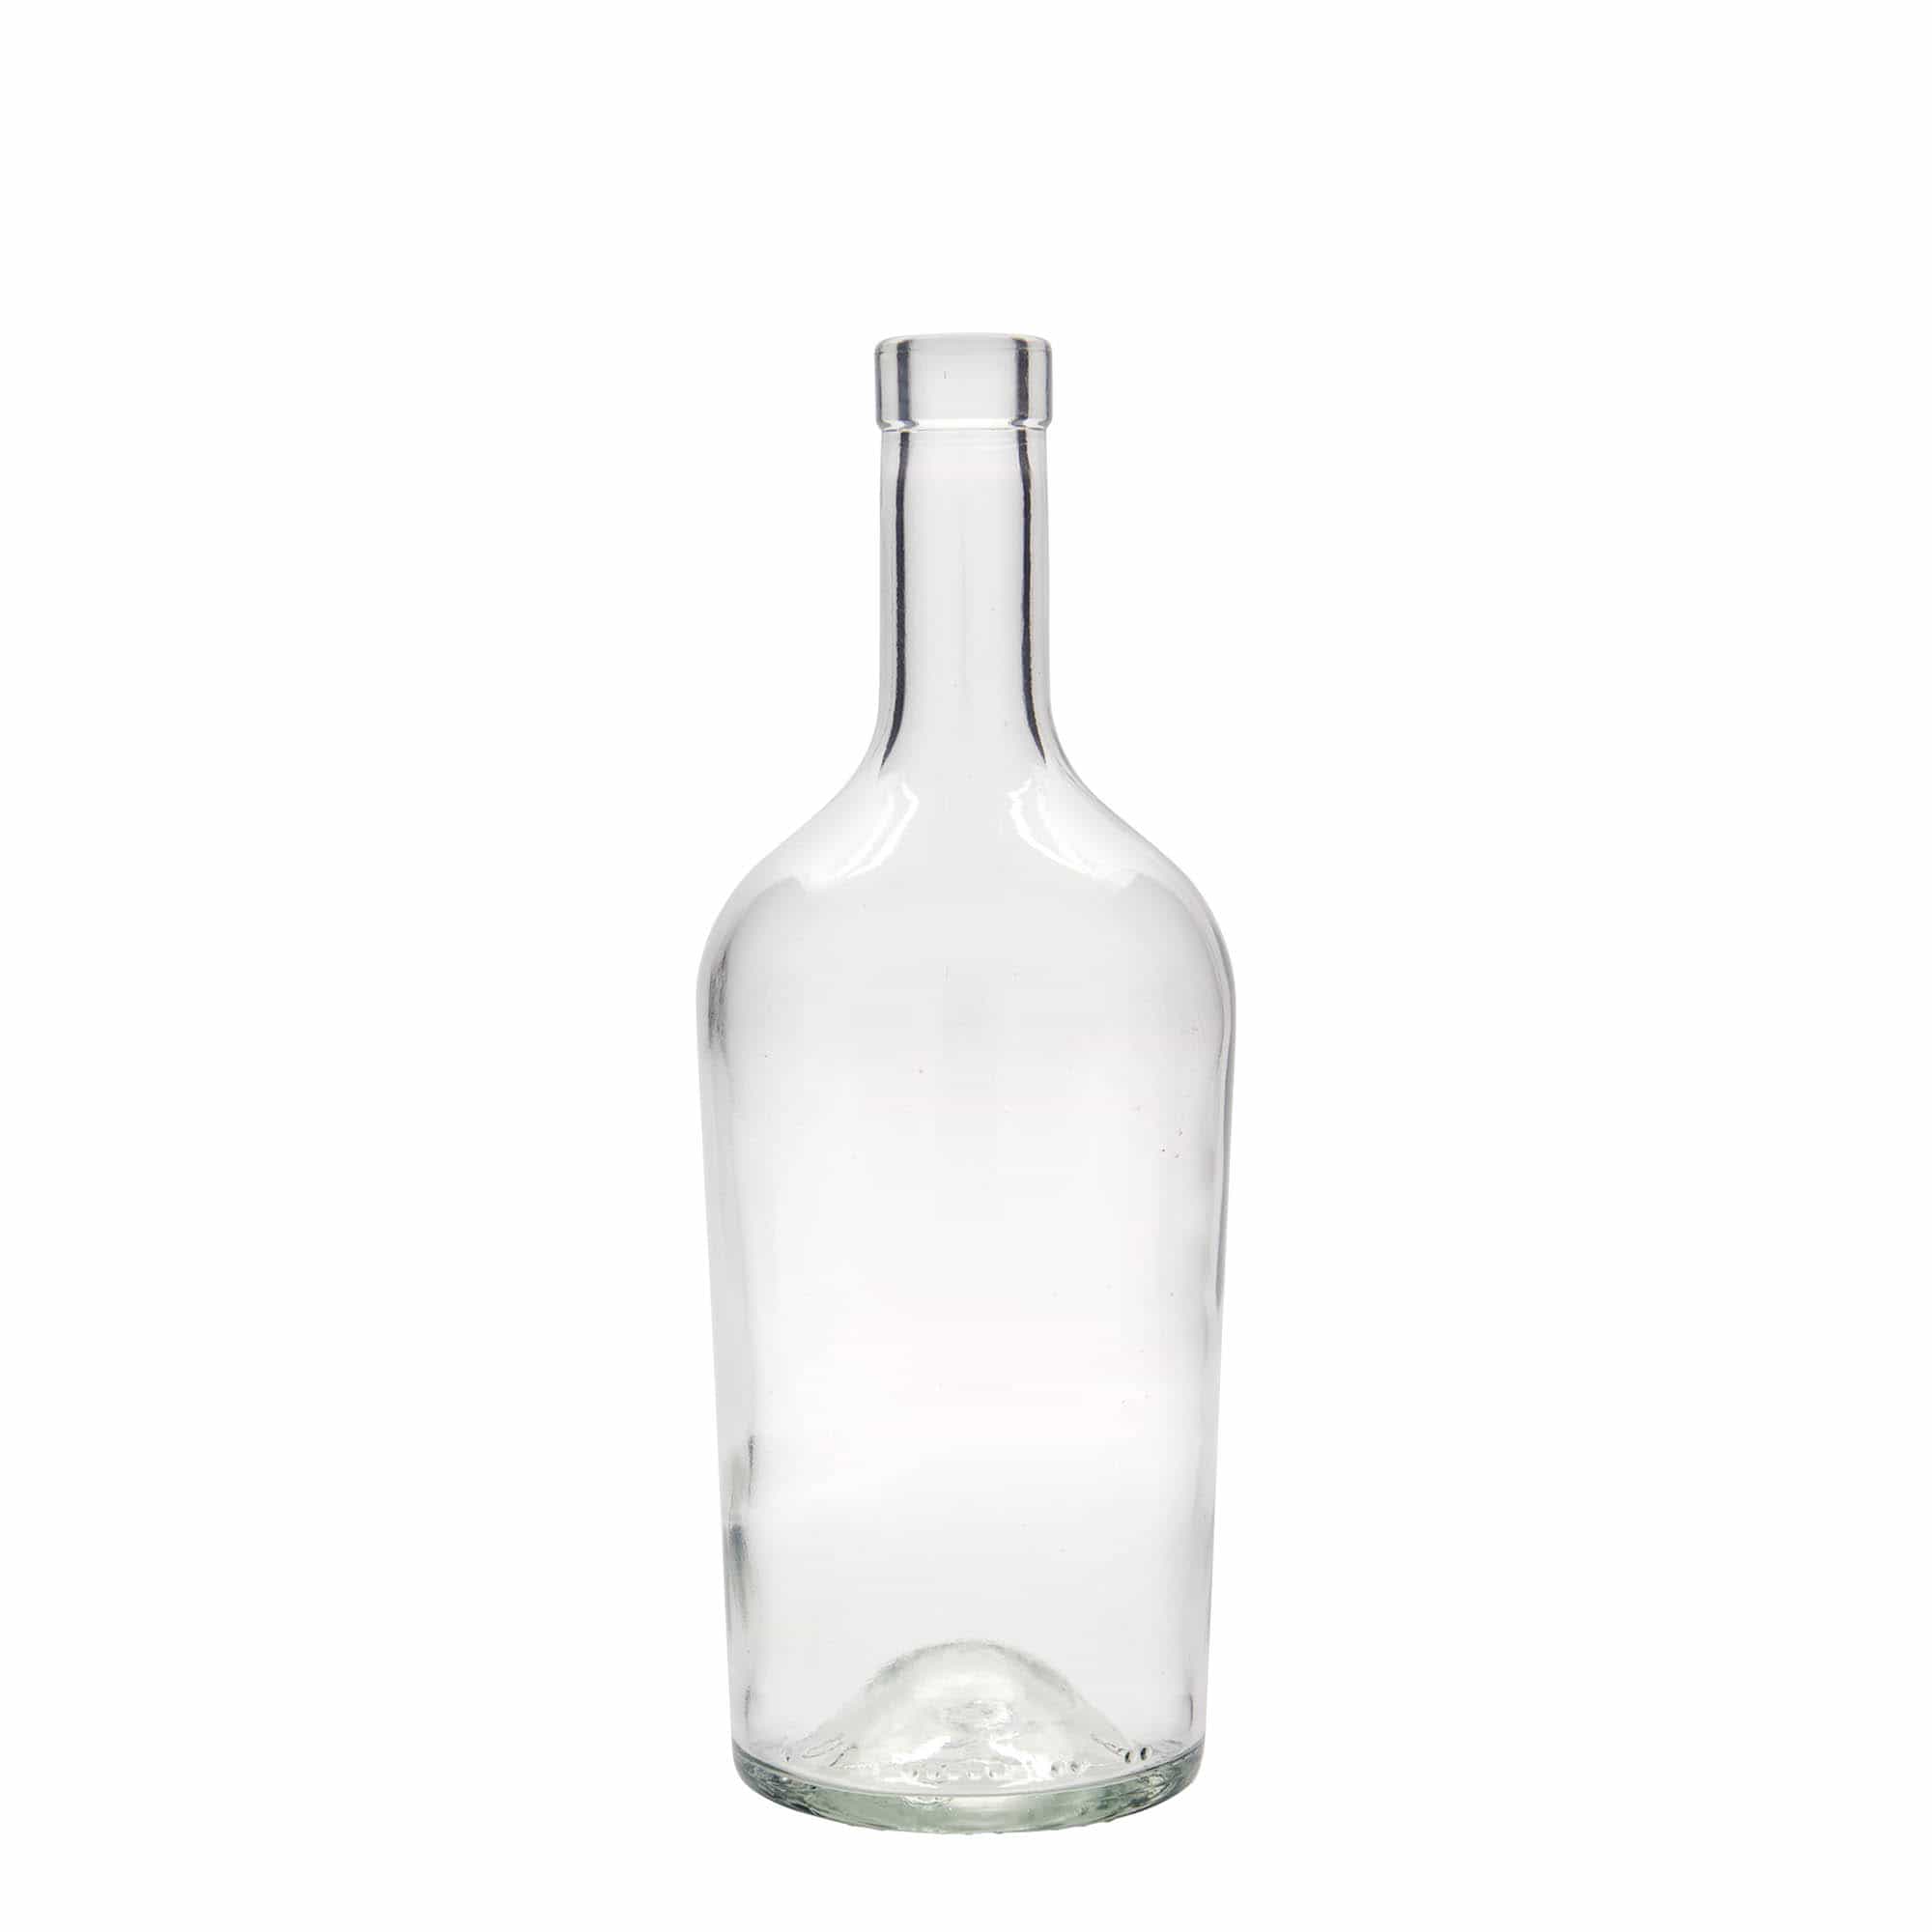 700 ml glass bottle 'Margarethe', closure: cork